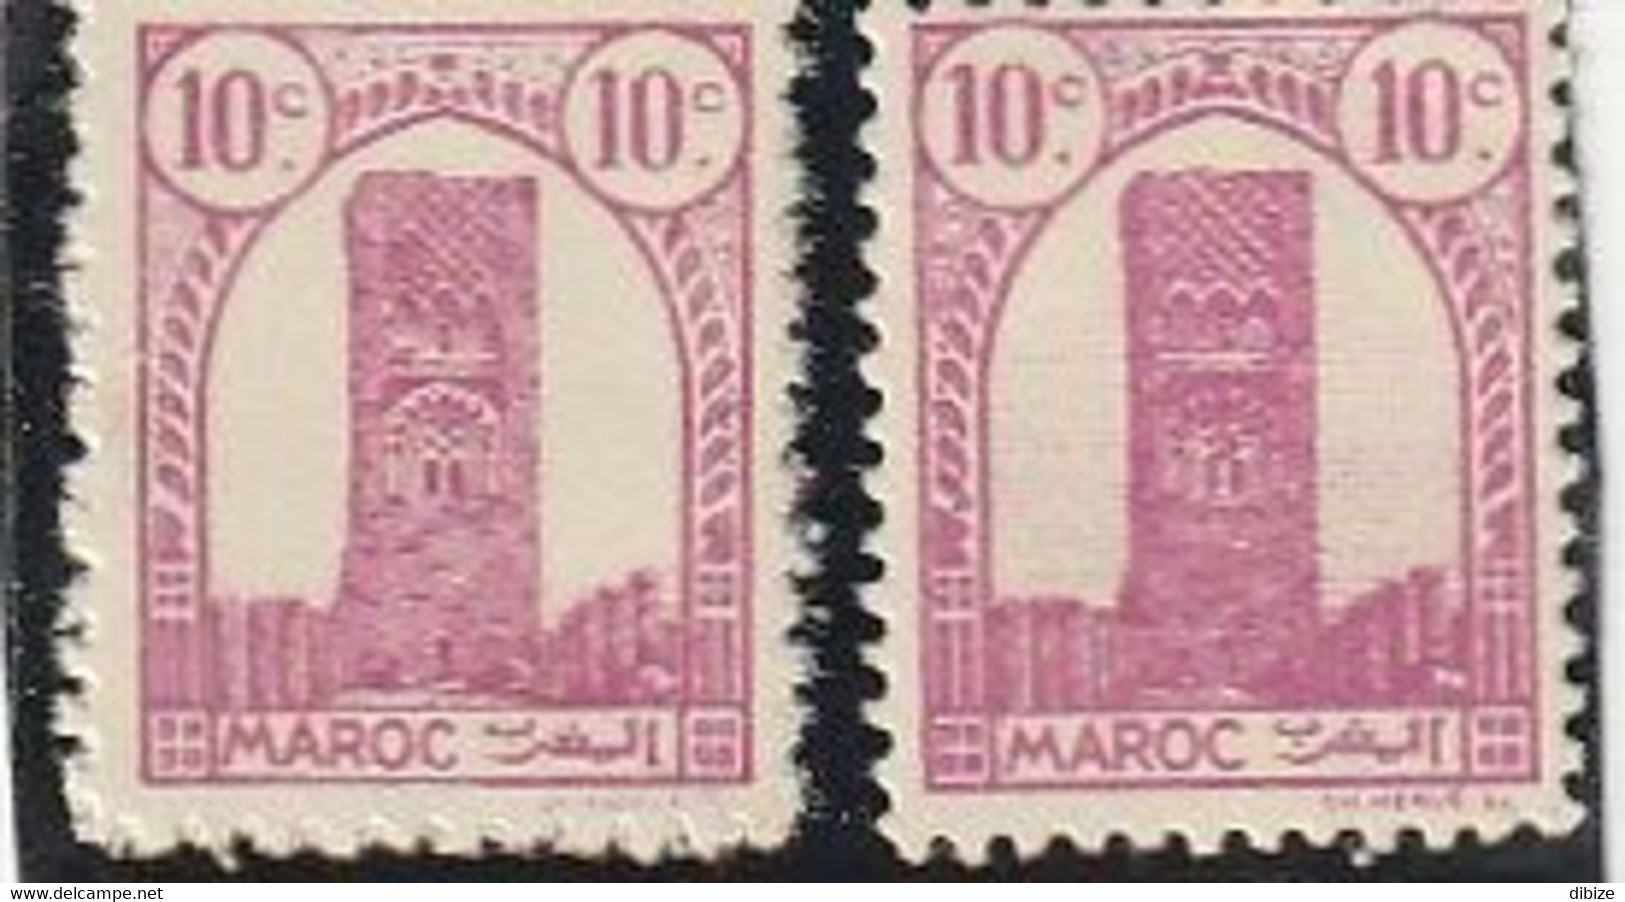 Maroc. Protectorat. Timbre Yvert Et Tellier N° 204. 1943. Tour Hassan. Variété. Fond Blanc Sans Rayures. - Oddities On Stamps